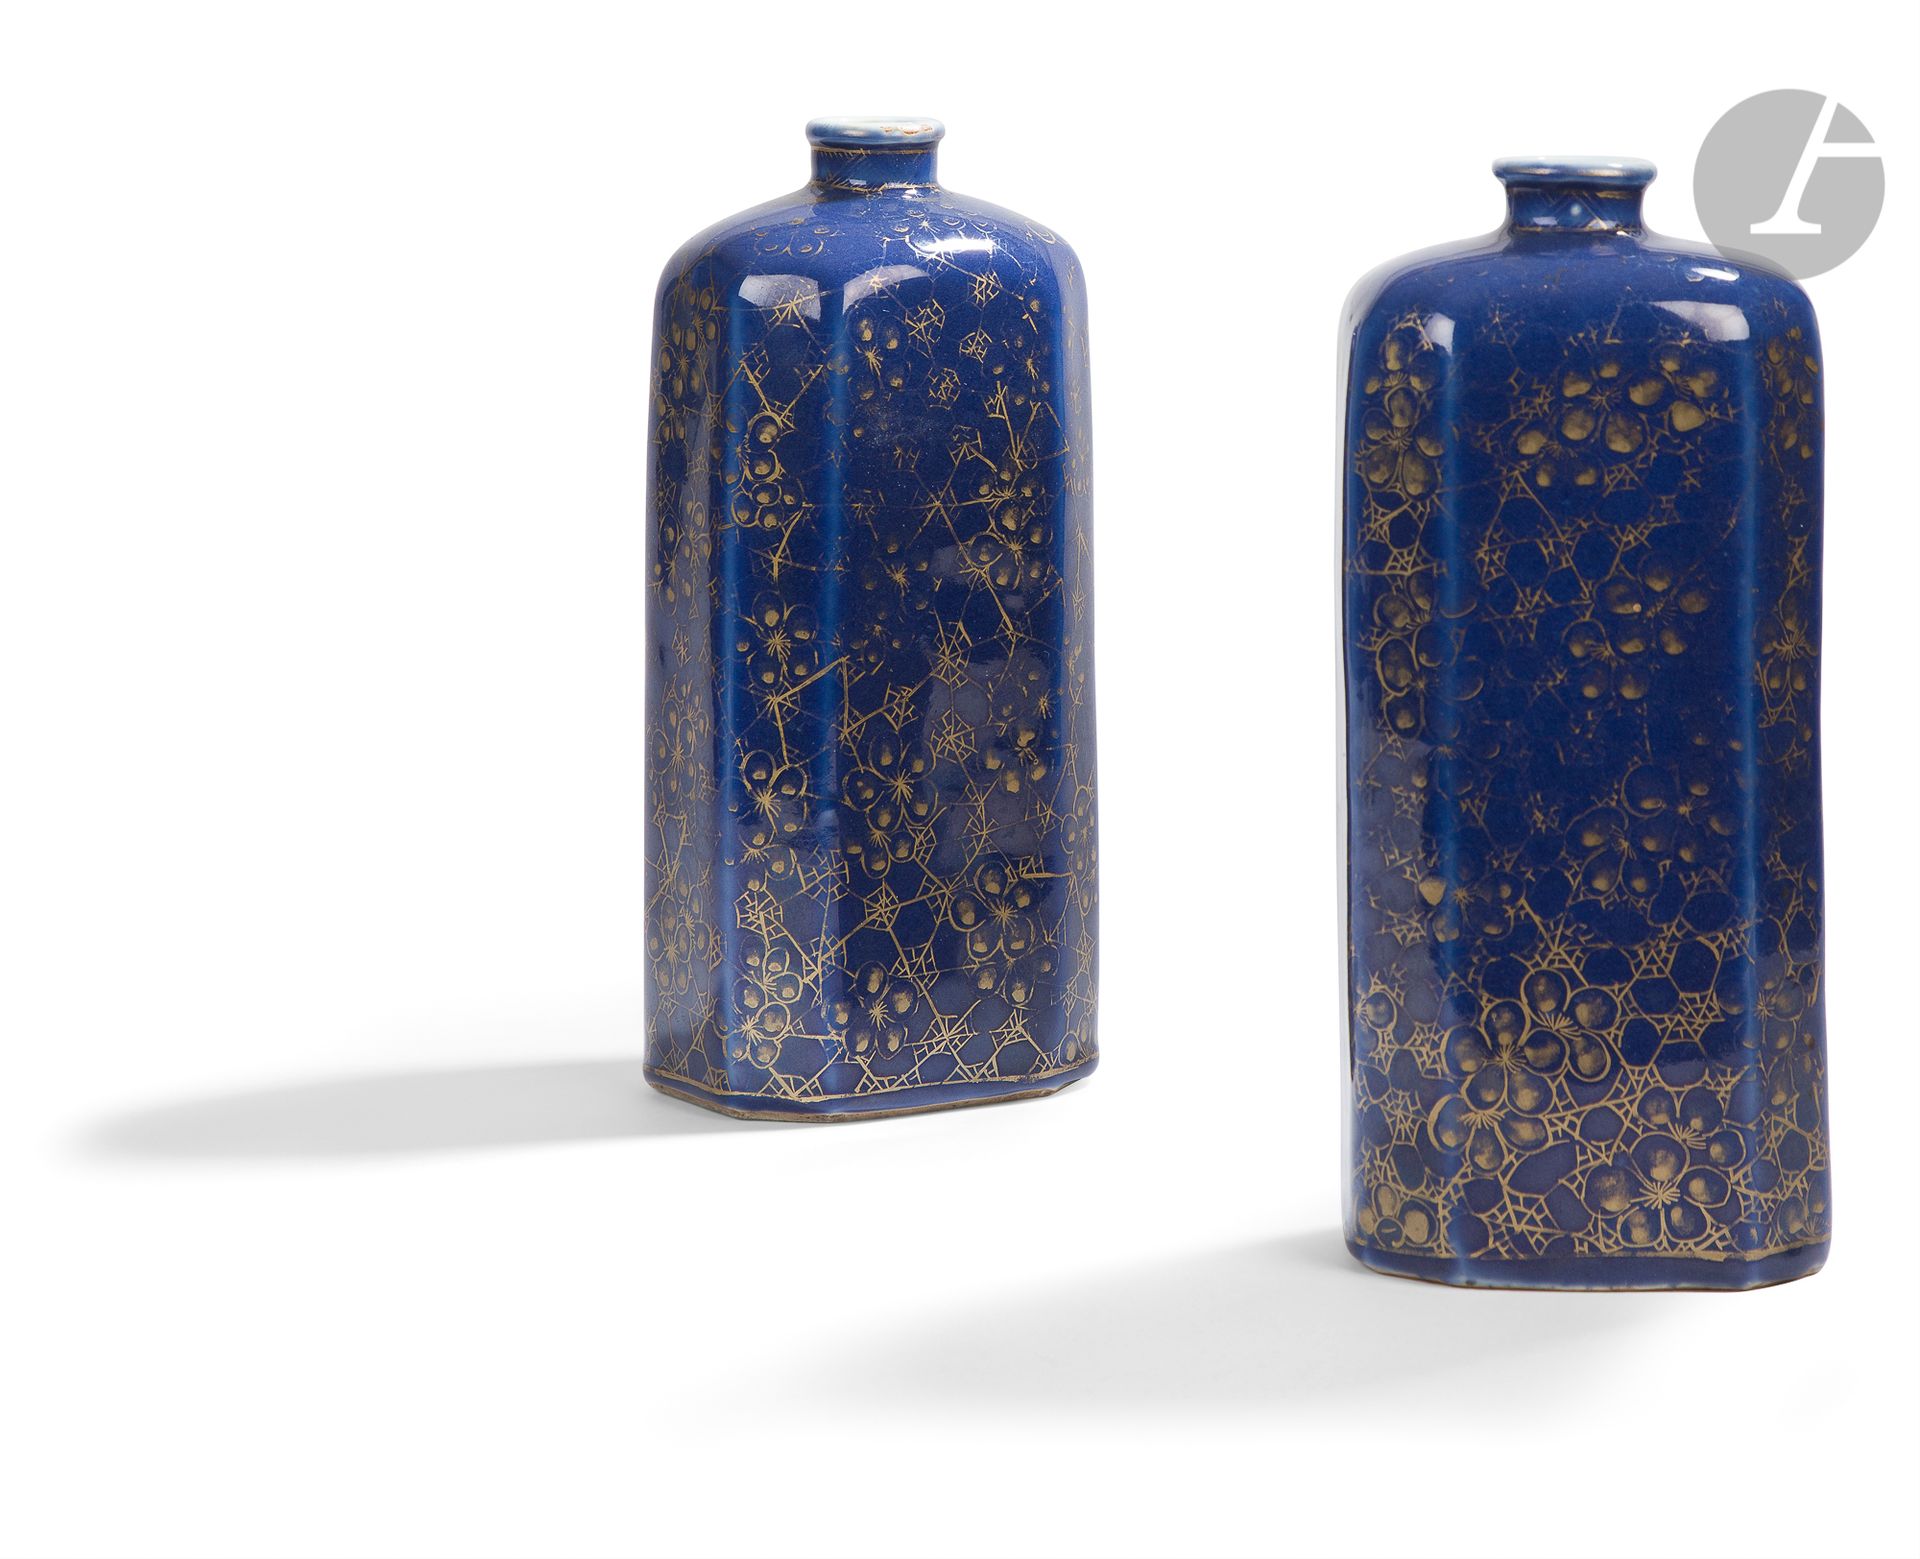 Null Pareja de botellas de porcelana azul empolvada, China,
siglo XVIIISección t&hellip;